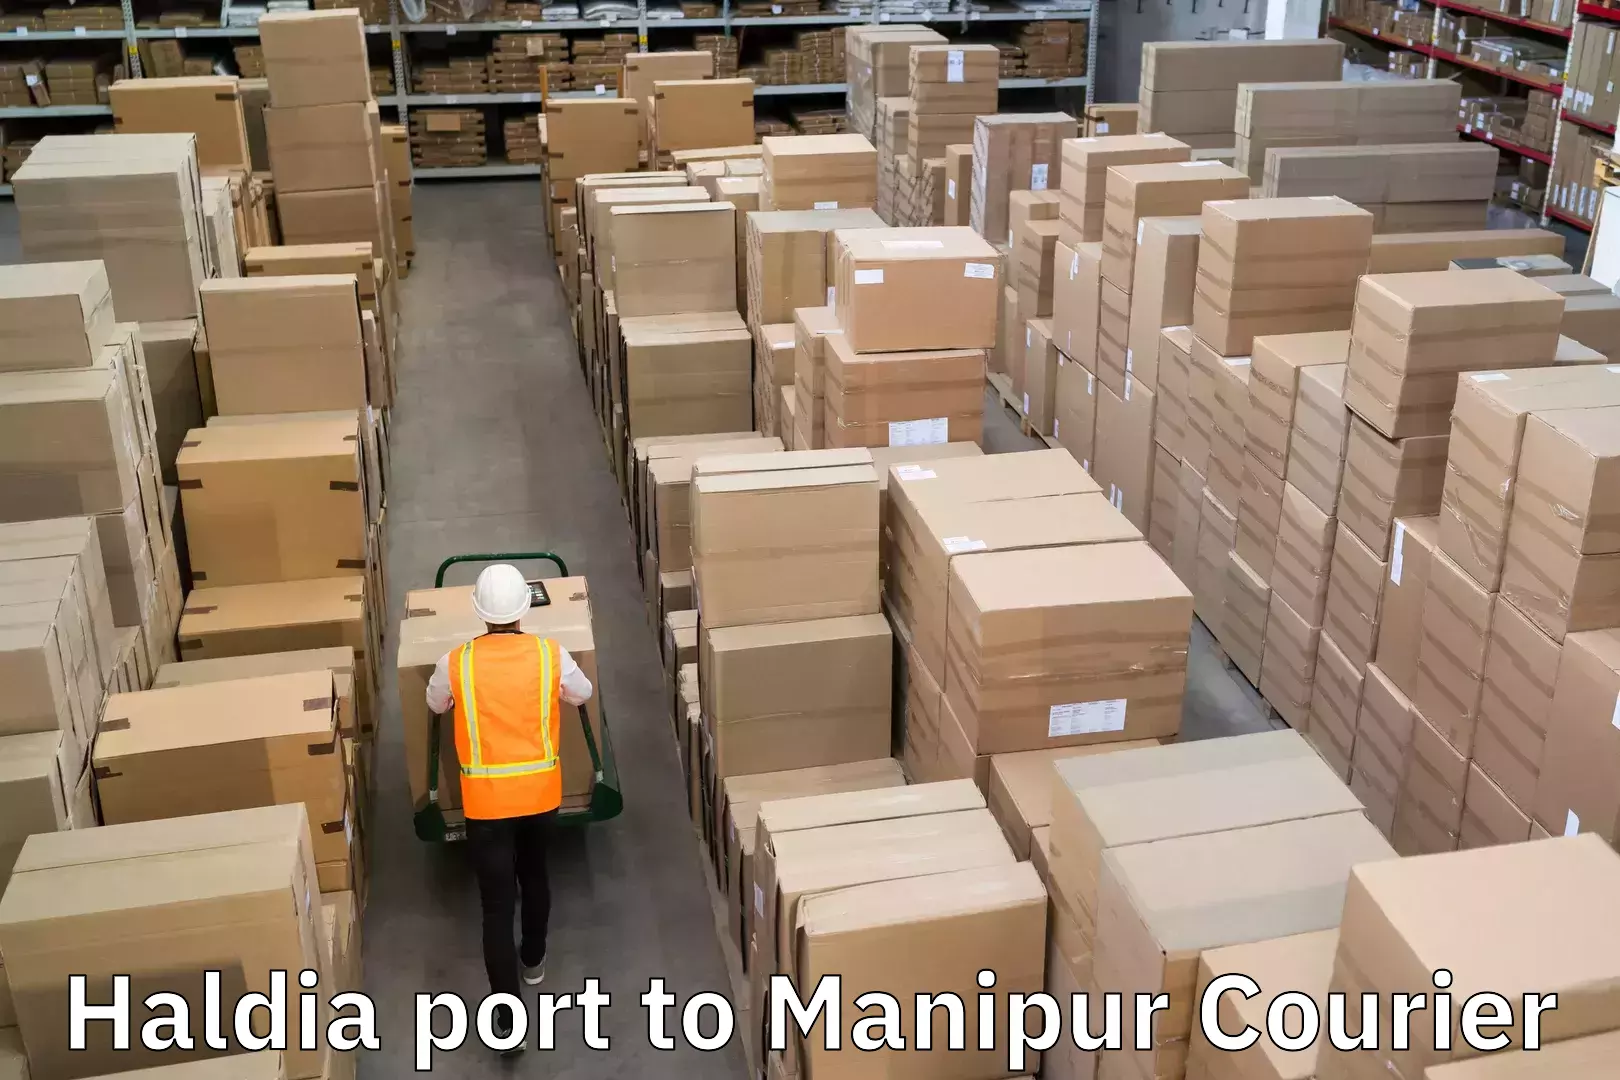 Delivery service partnership Haldia port to Manipur